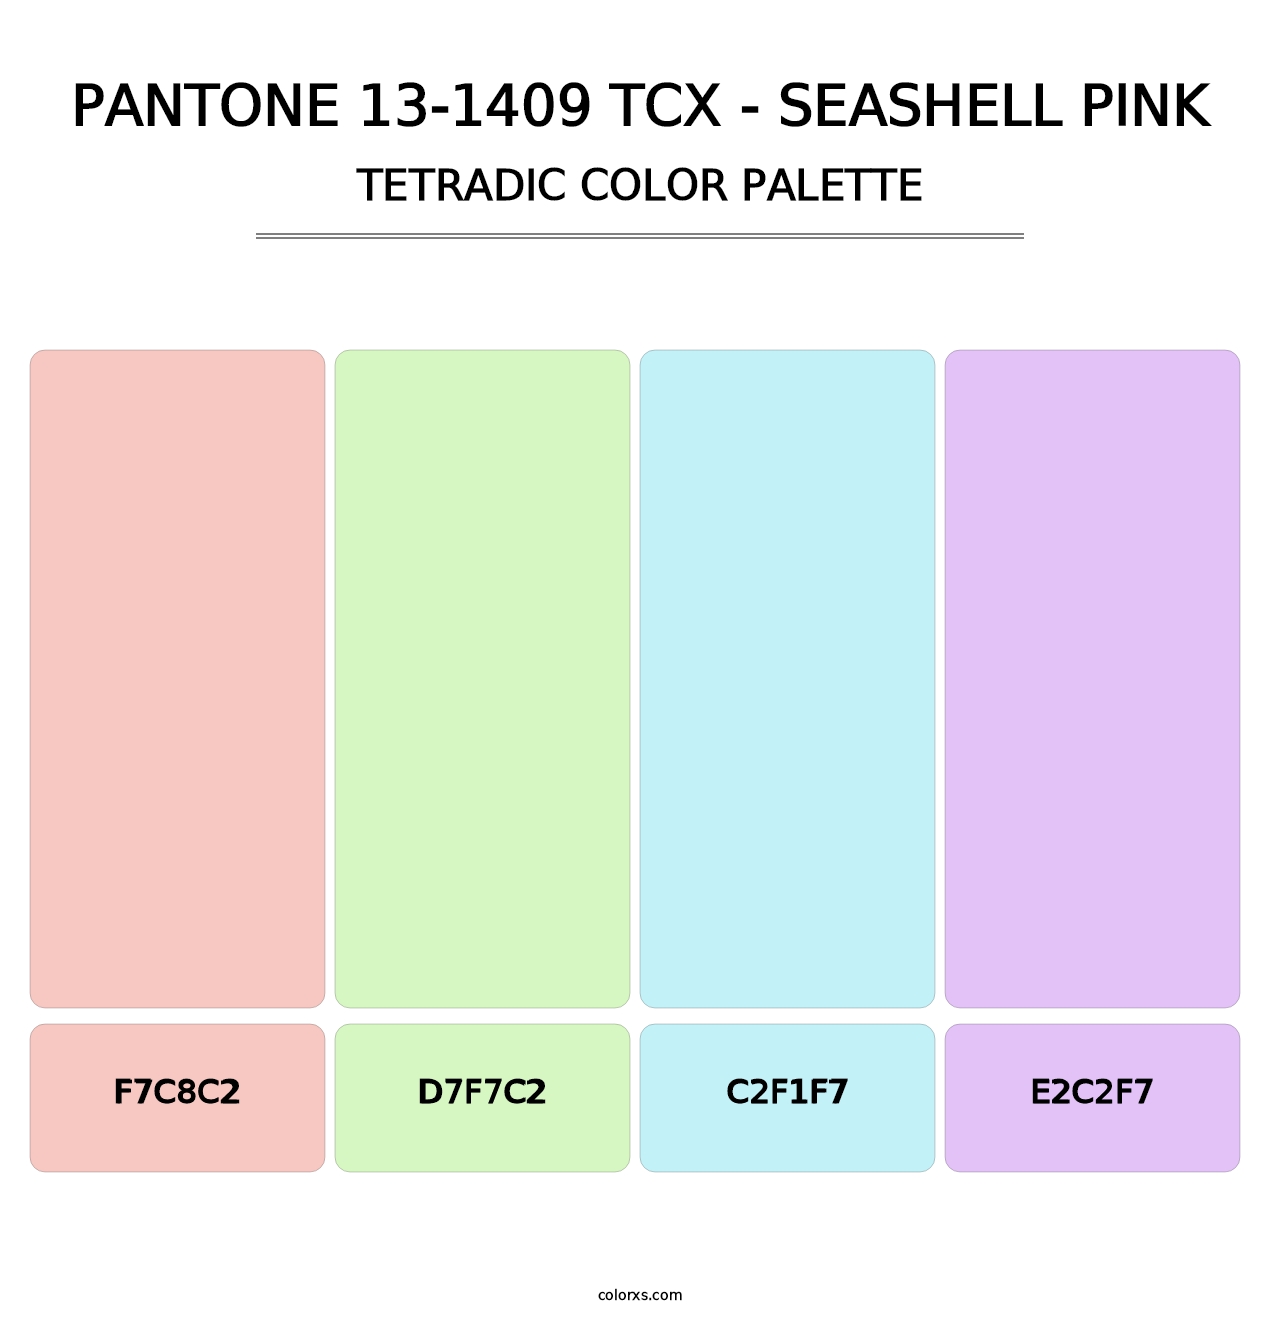 PANTONE 13-1409 TCX - Seashell Pink - Tetradic Color Palette